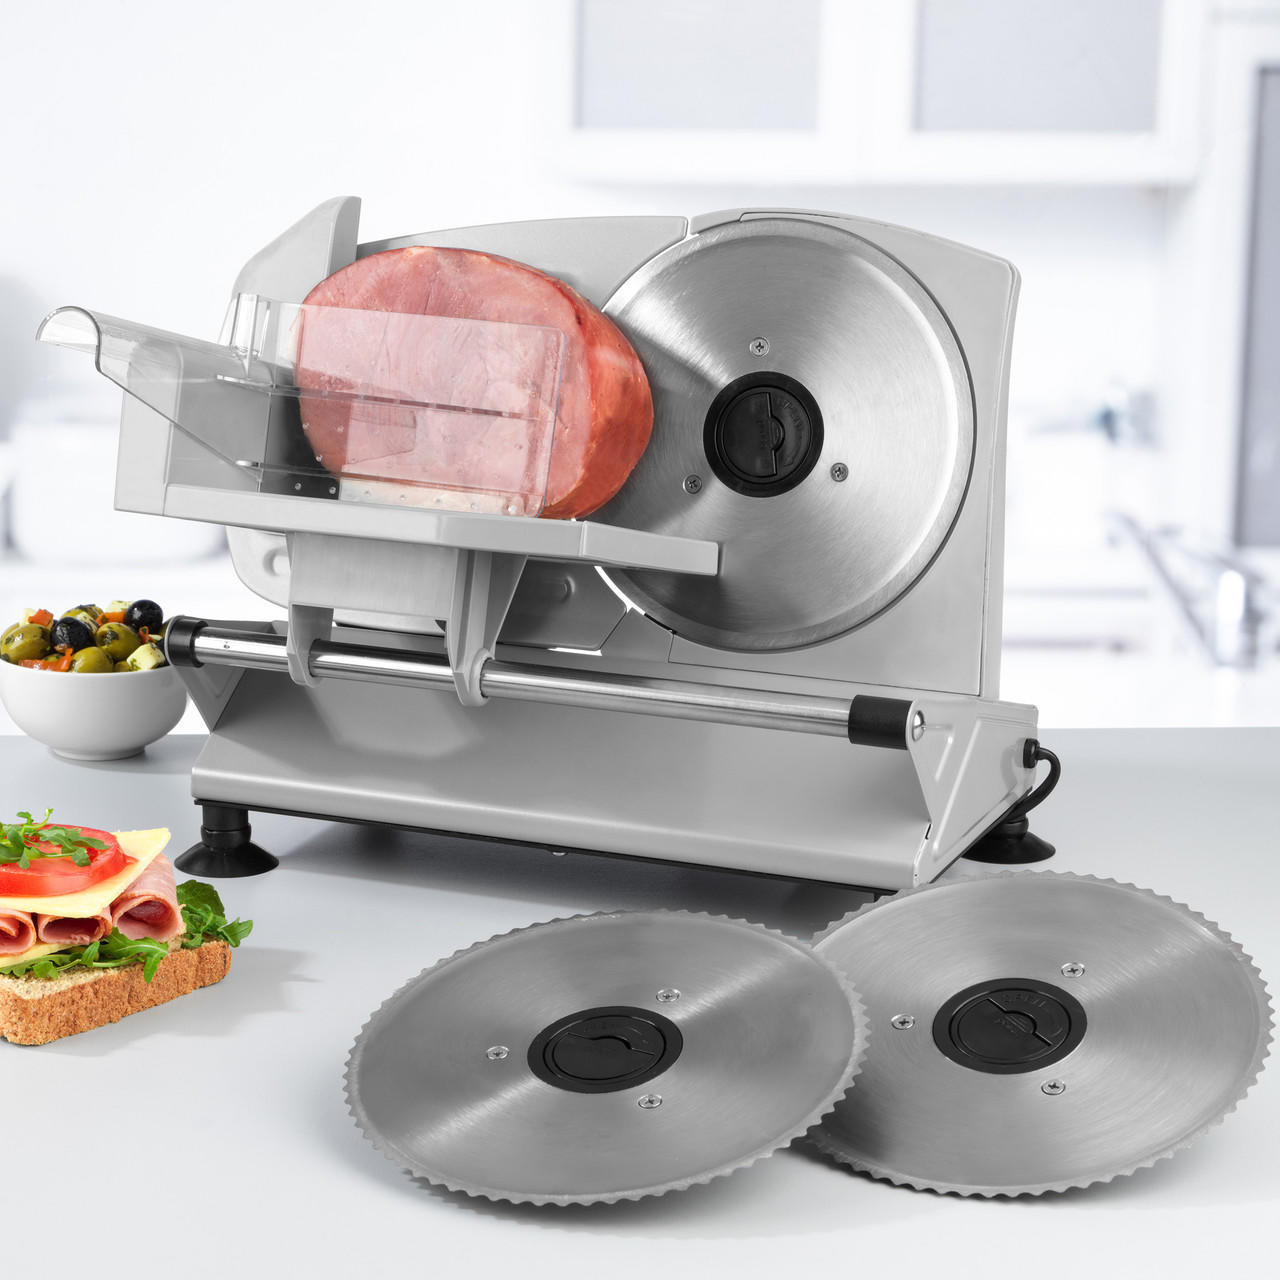 200 Everyday Food Slicer, Gray cortafiambres electrico meat slicer machine